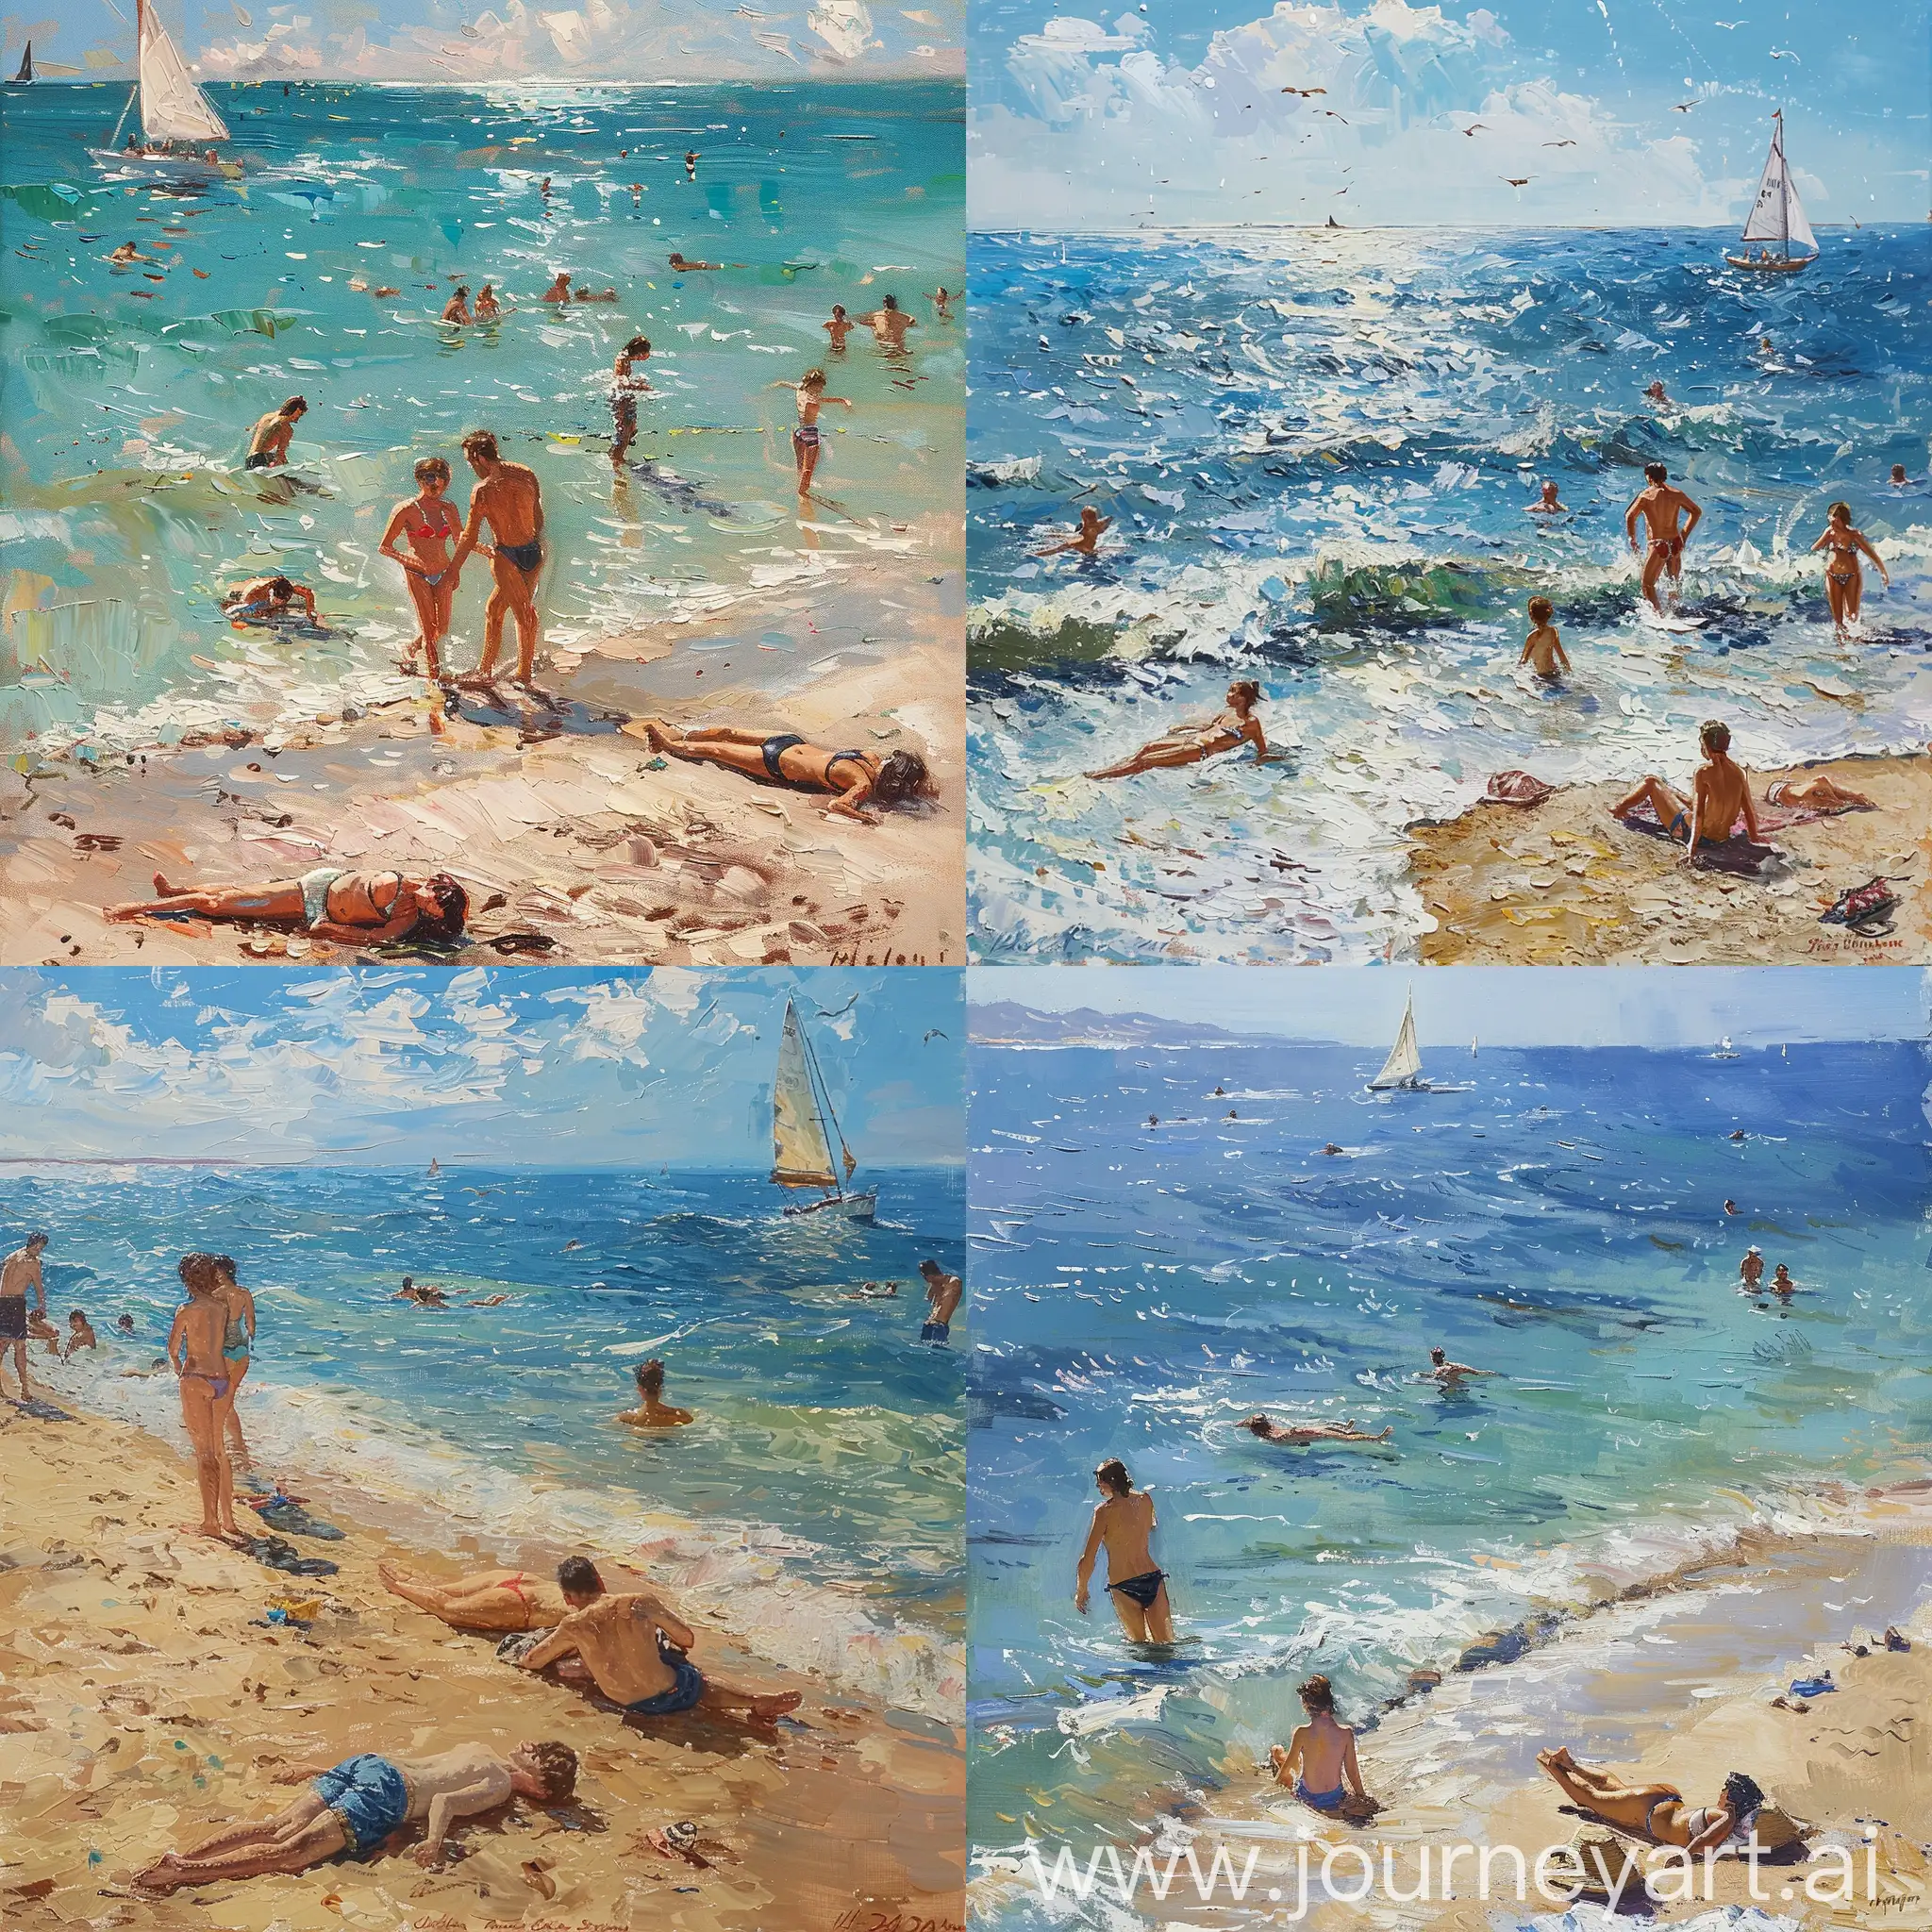 Sunny-Day-Seascape-Beachgoers-Enjoying-a-Peaceful-Swim-and-Relaxation